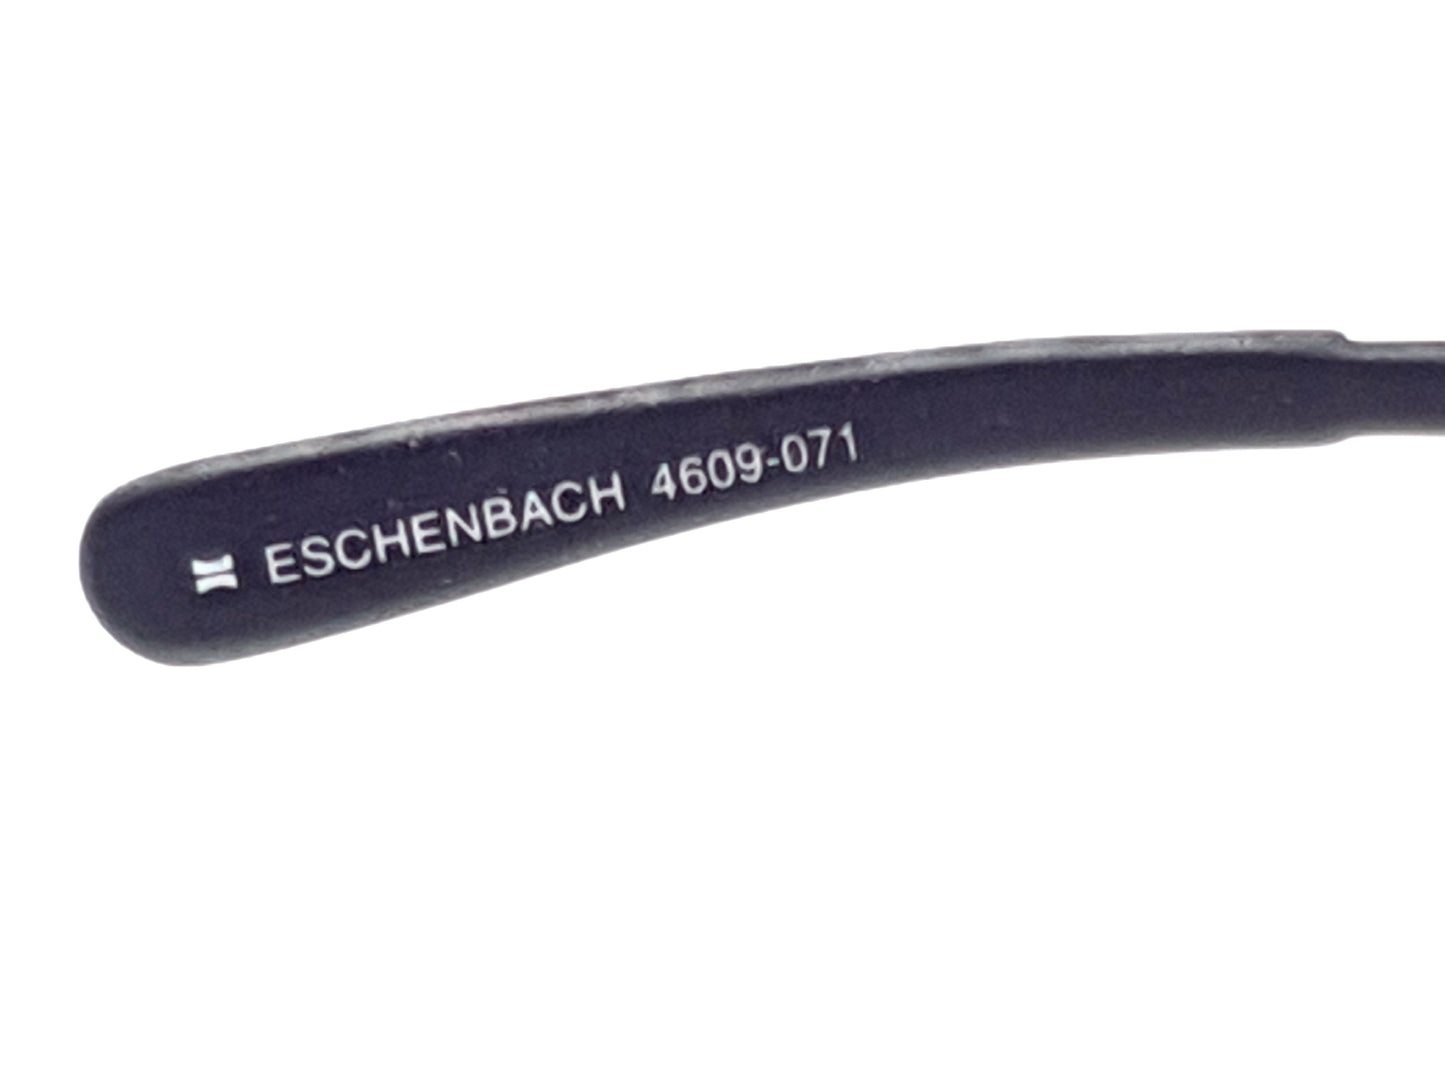 HUMPHREY'S ESCHENBACH 4609-071